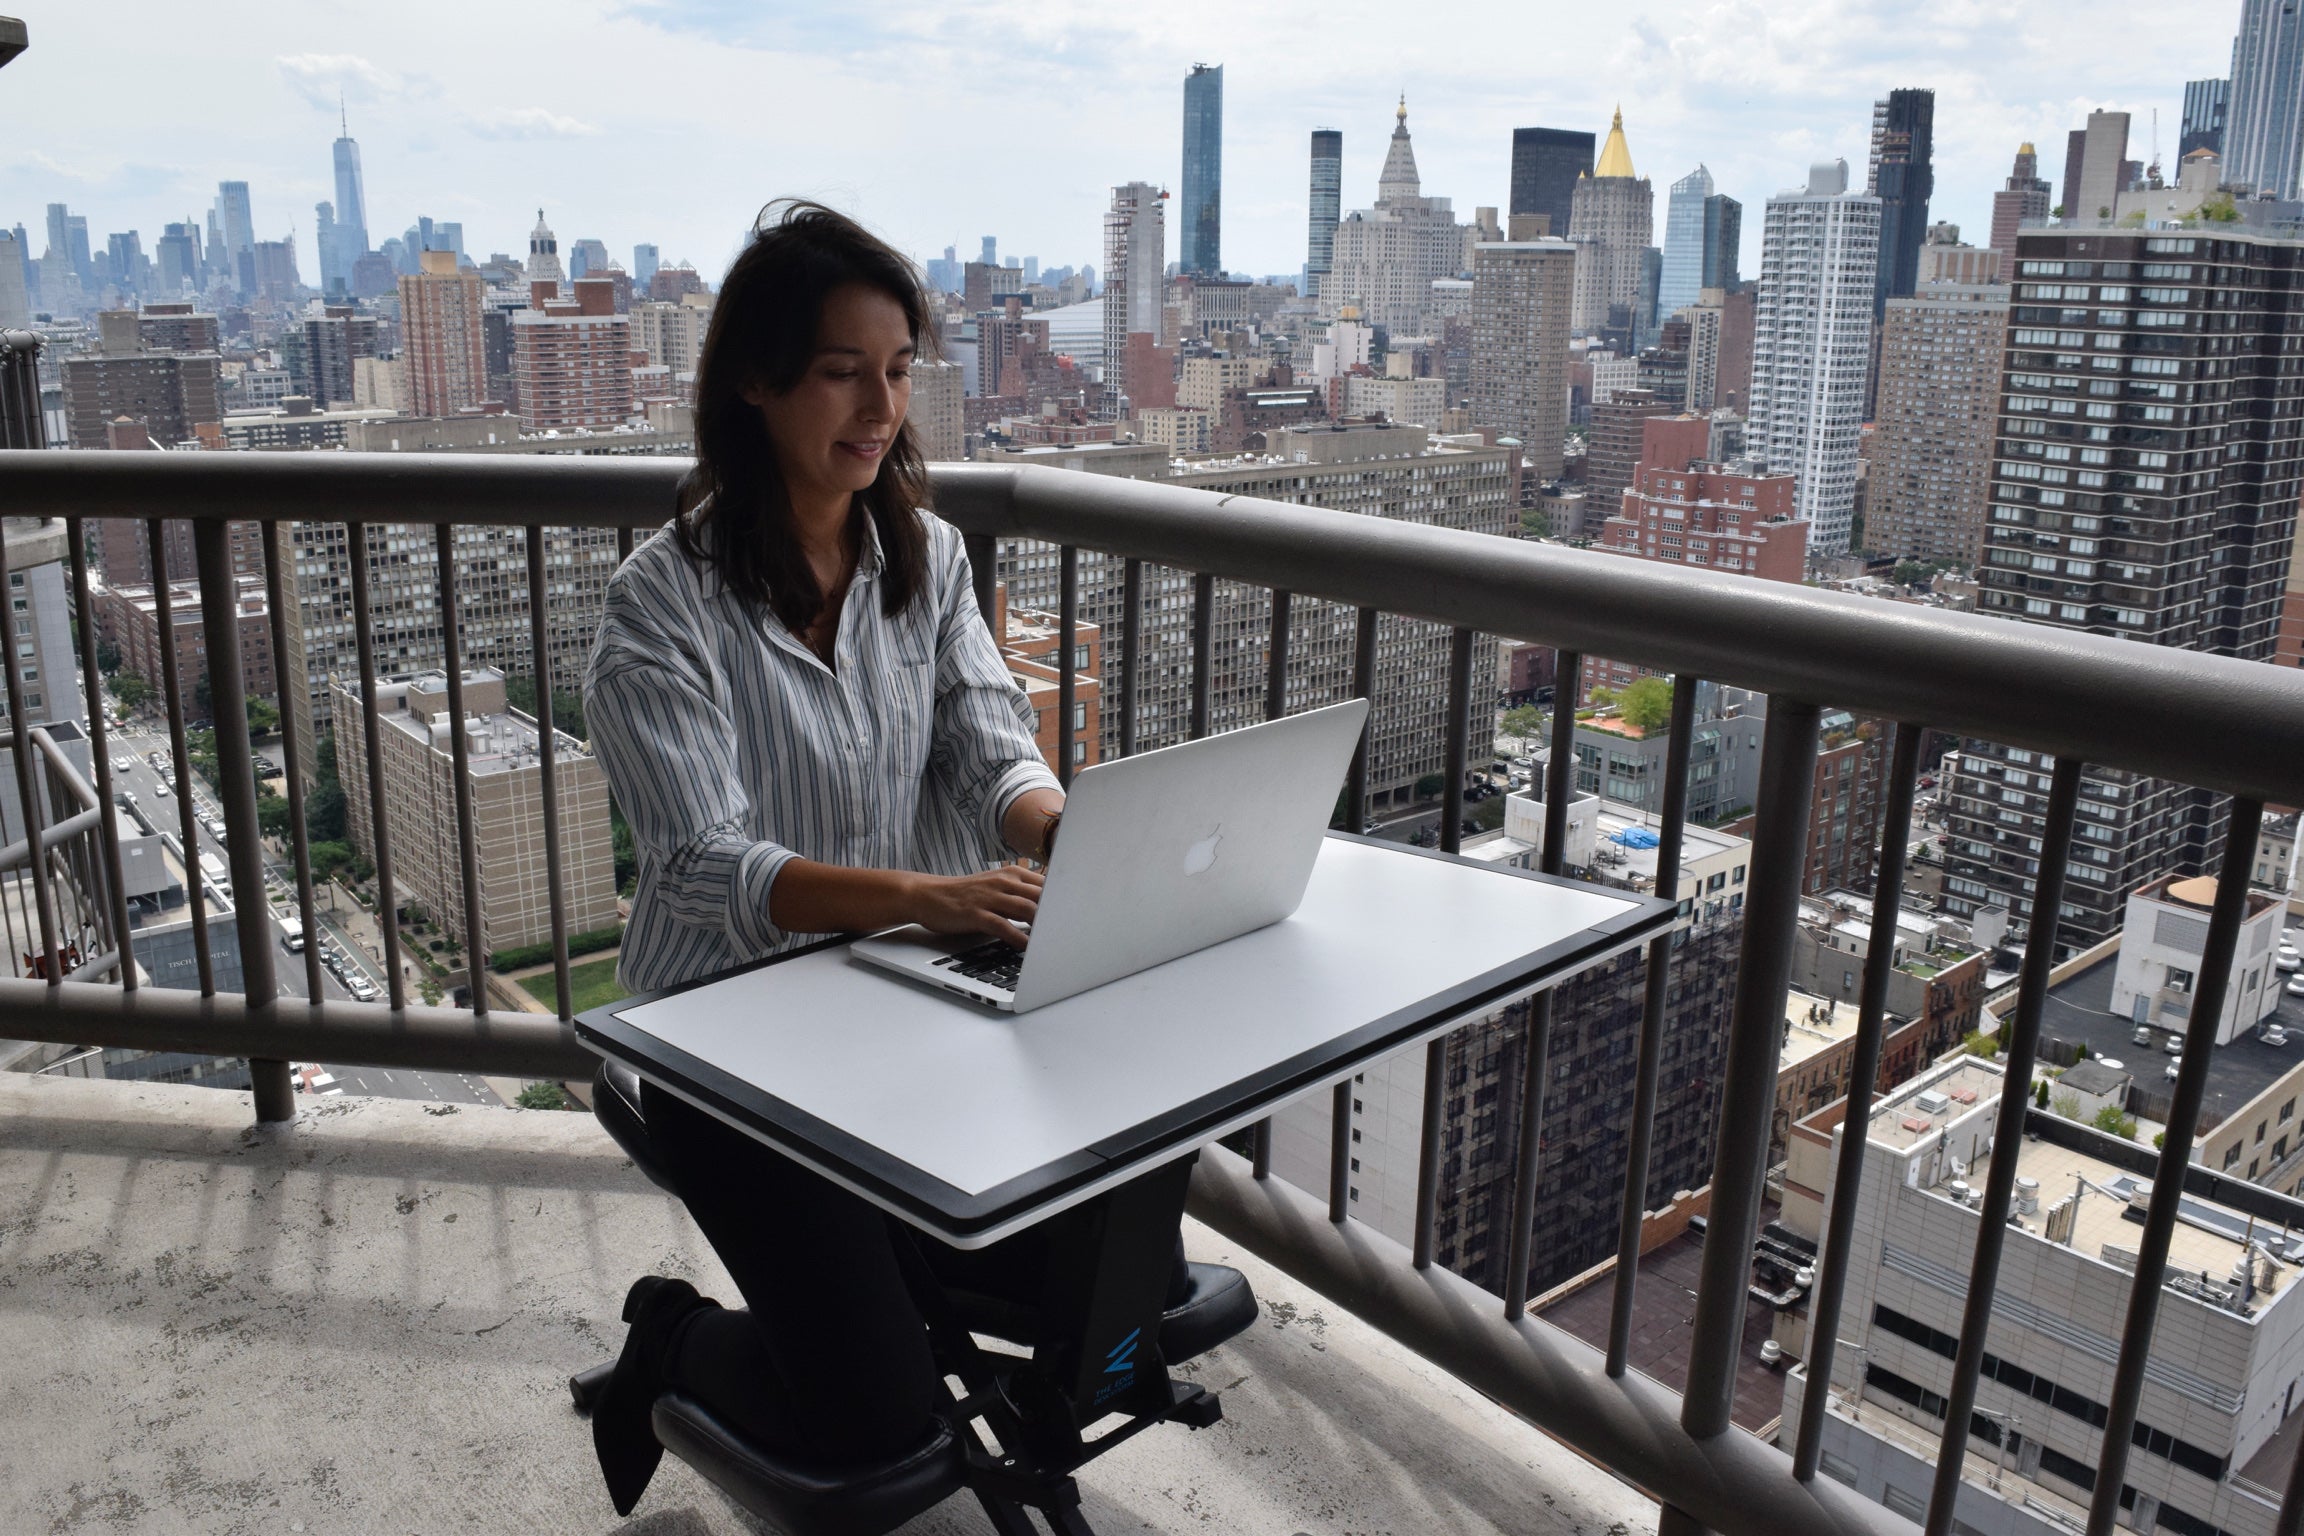 Woman happily using the edge desk ergonomic kneeling desk as an adjustable workstation on her balcony